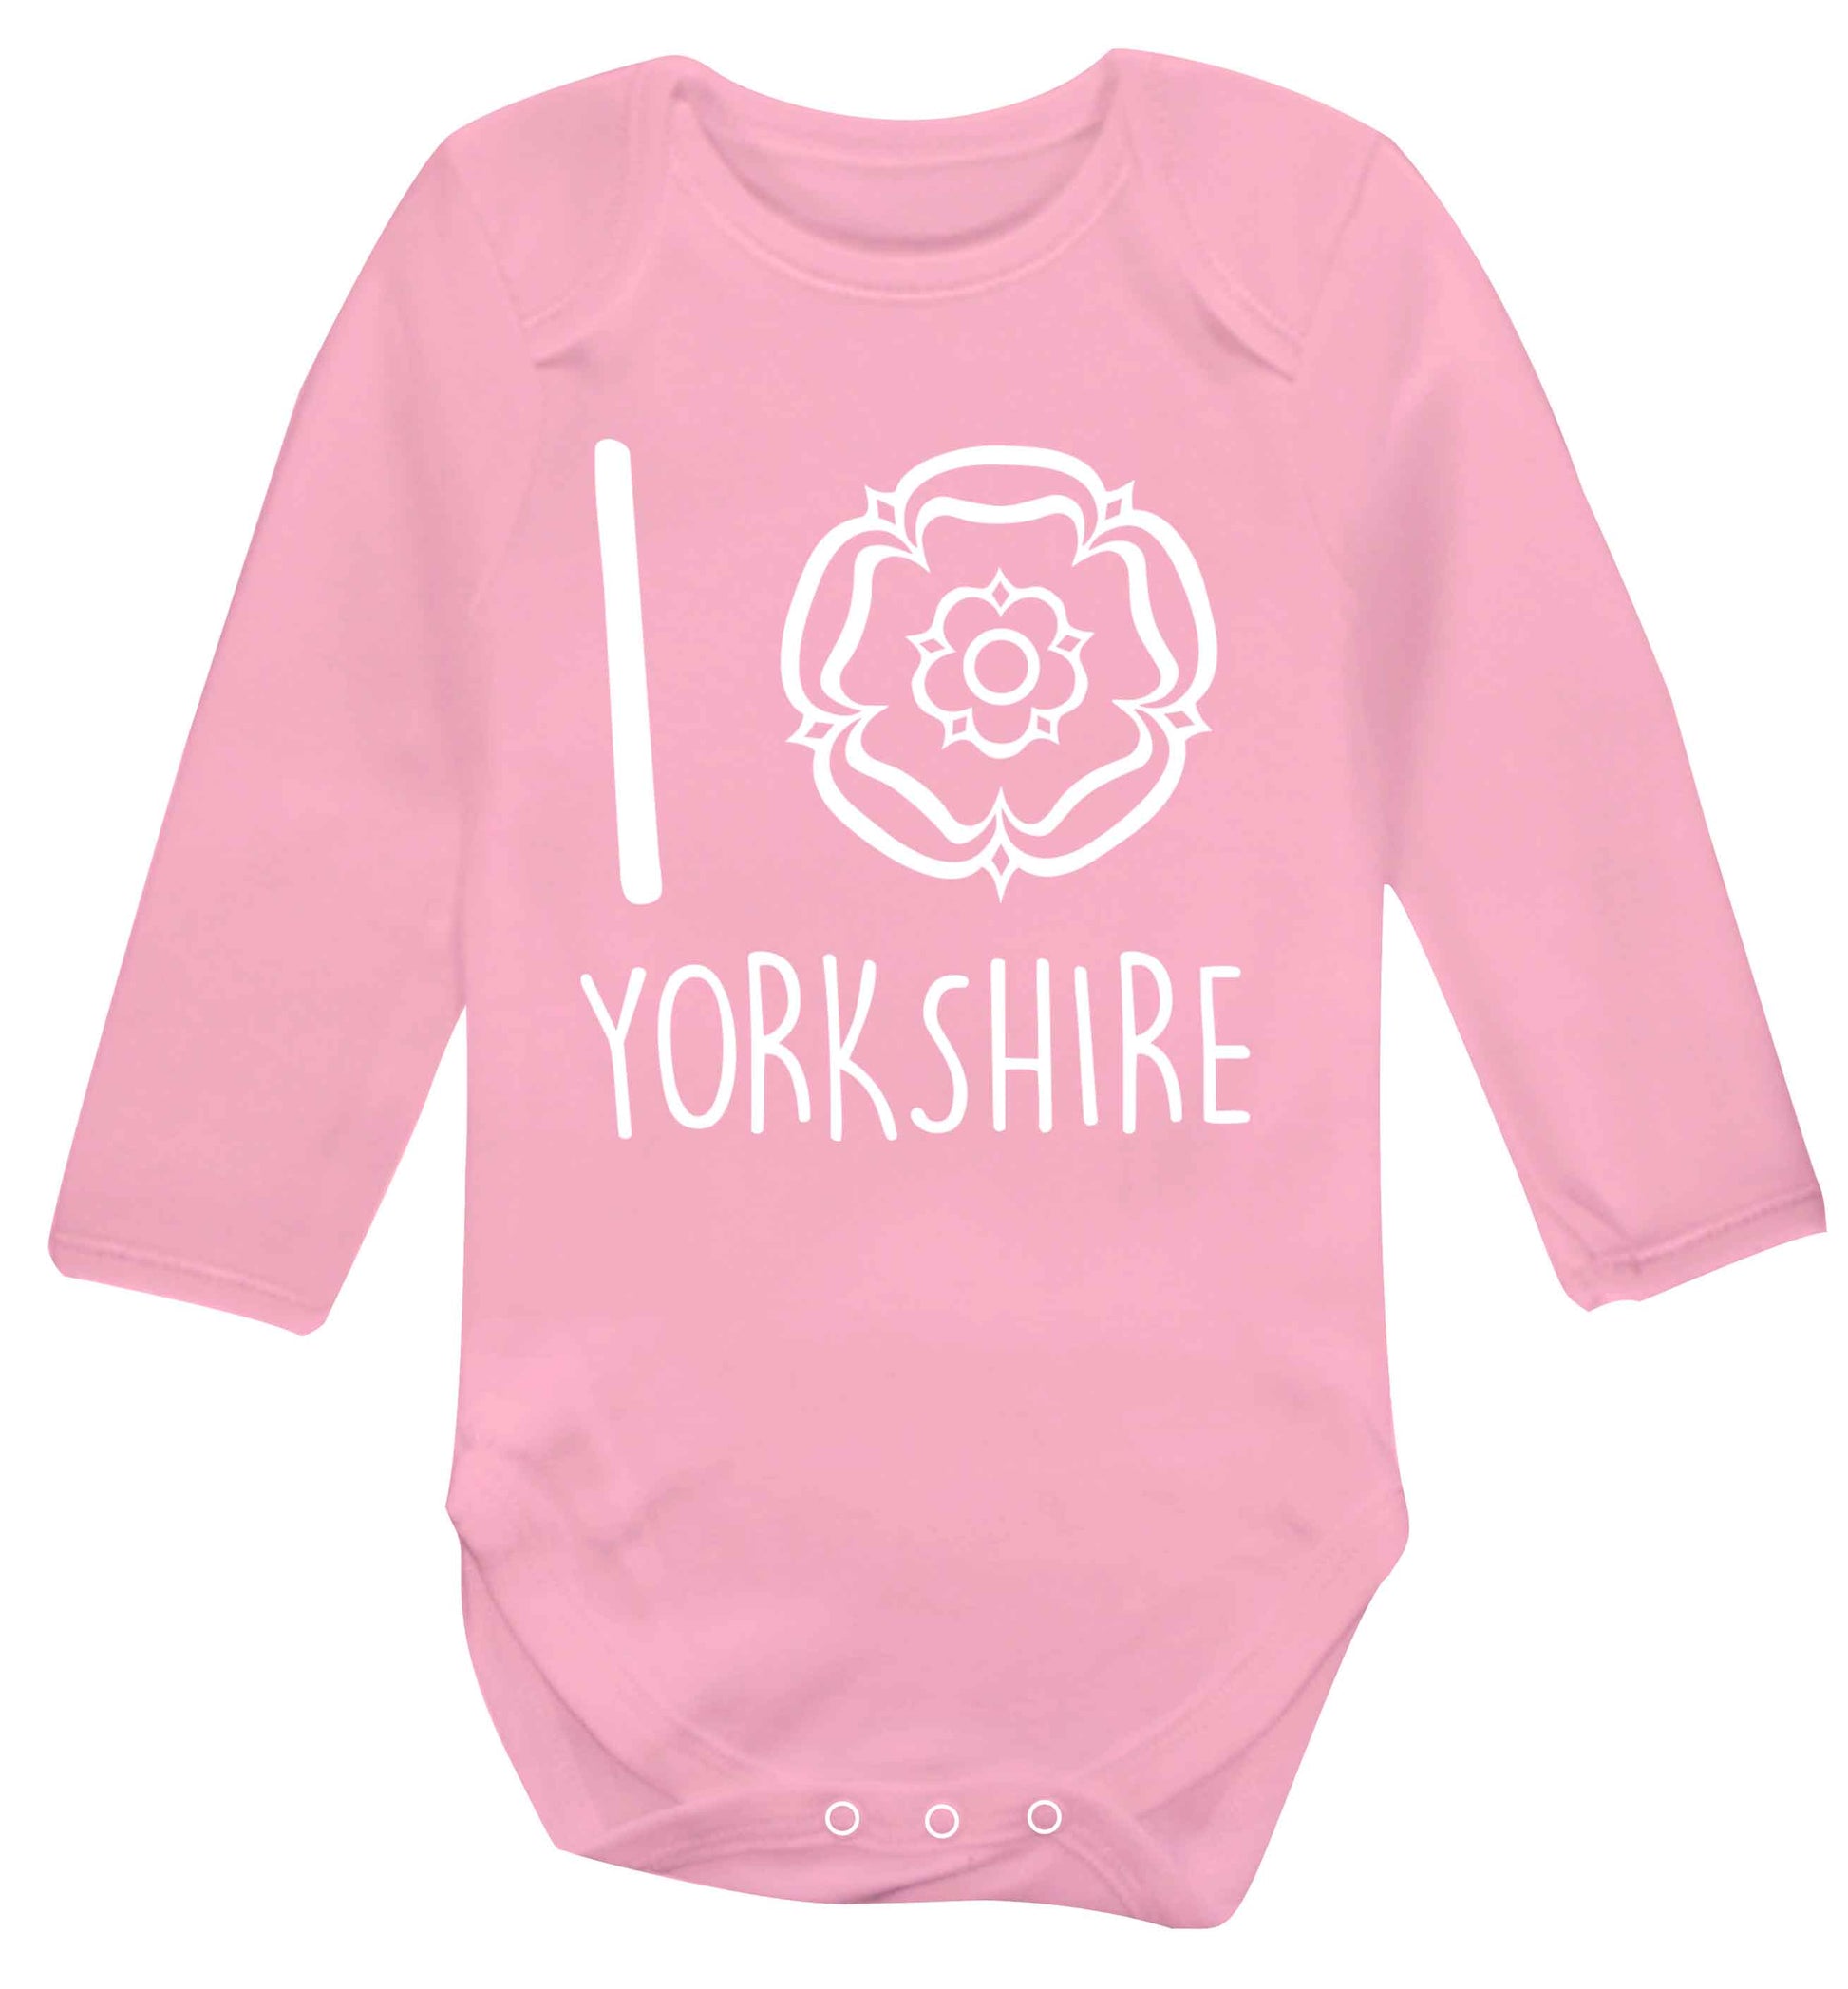 I love Yorkshire Baby Vest long sleeved pale pink 6-12 months